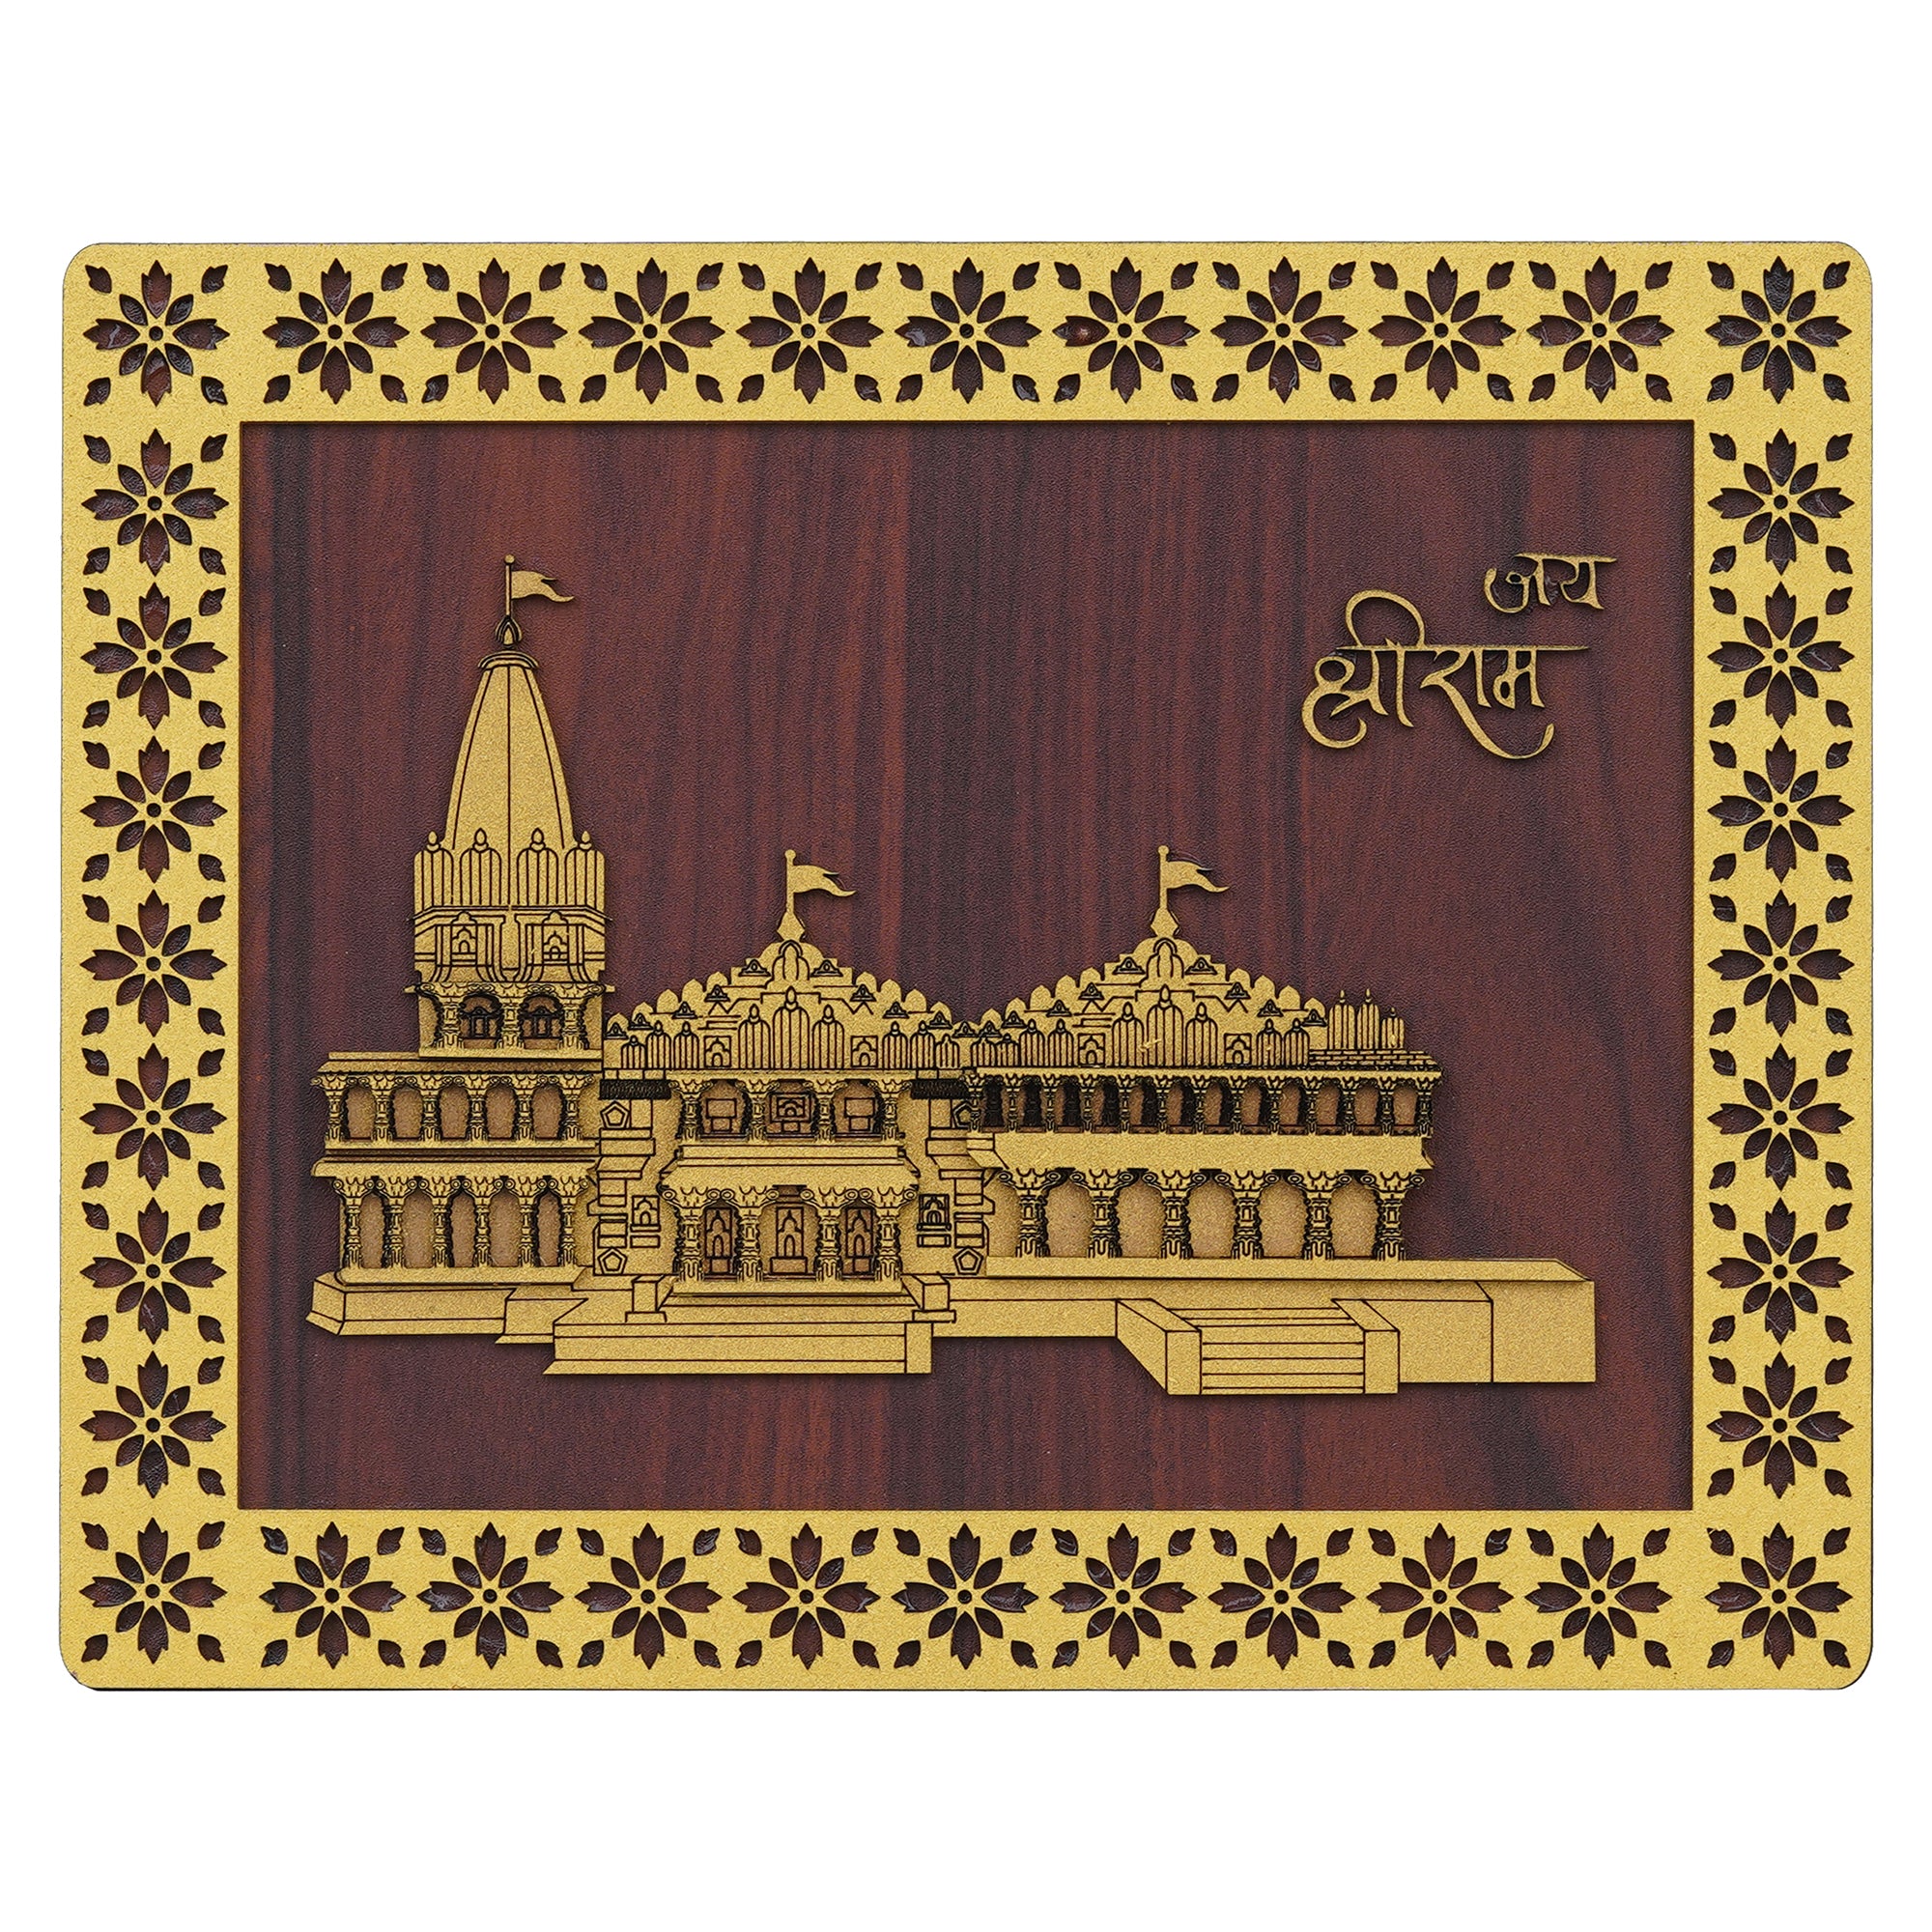 eCraftIndia Jai Shri Ram Mandir Ayodhya Decorative Wooden Frame - Religious Wall Hanging Showpiece for Home Decor, and Spiritual Gifting (Gold, Brown) 2